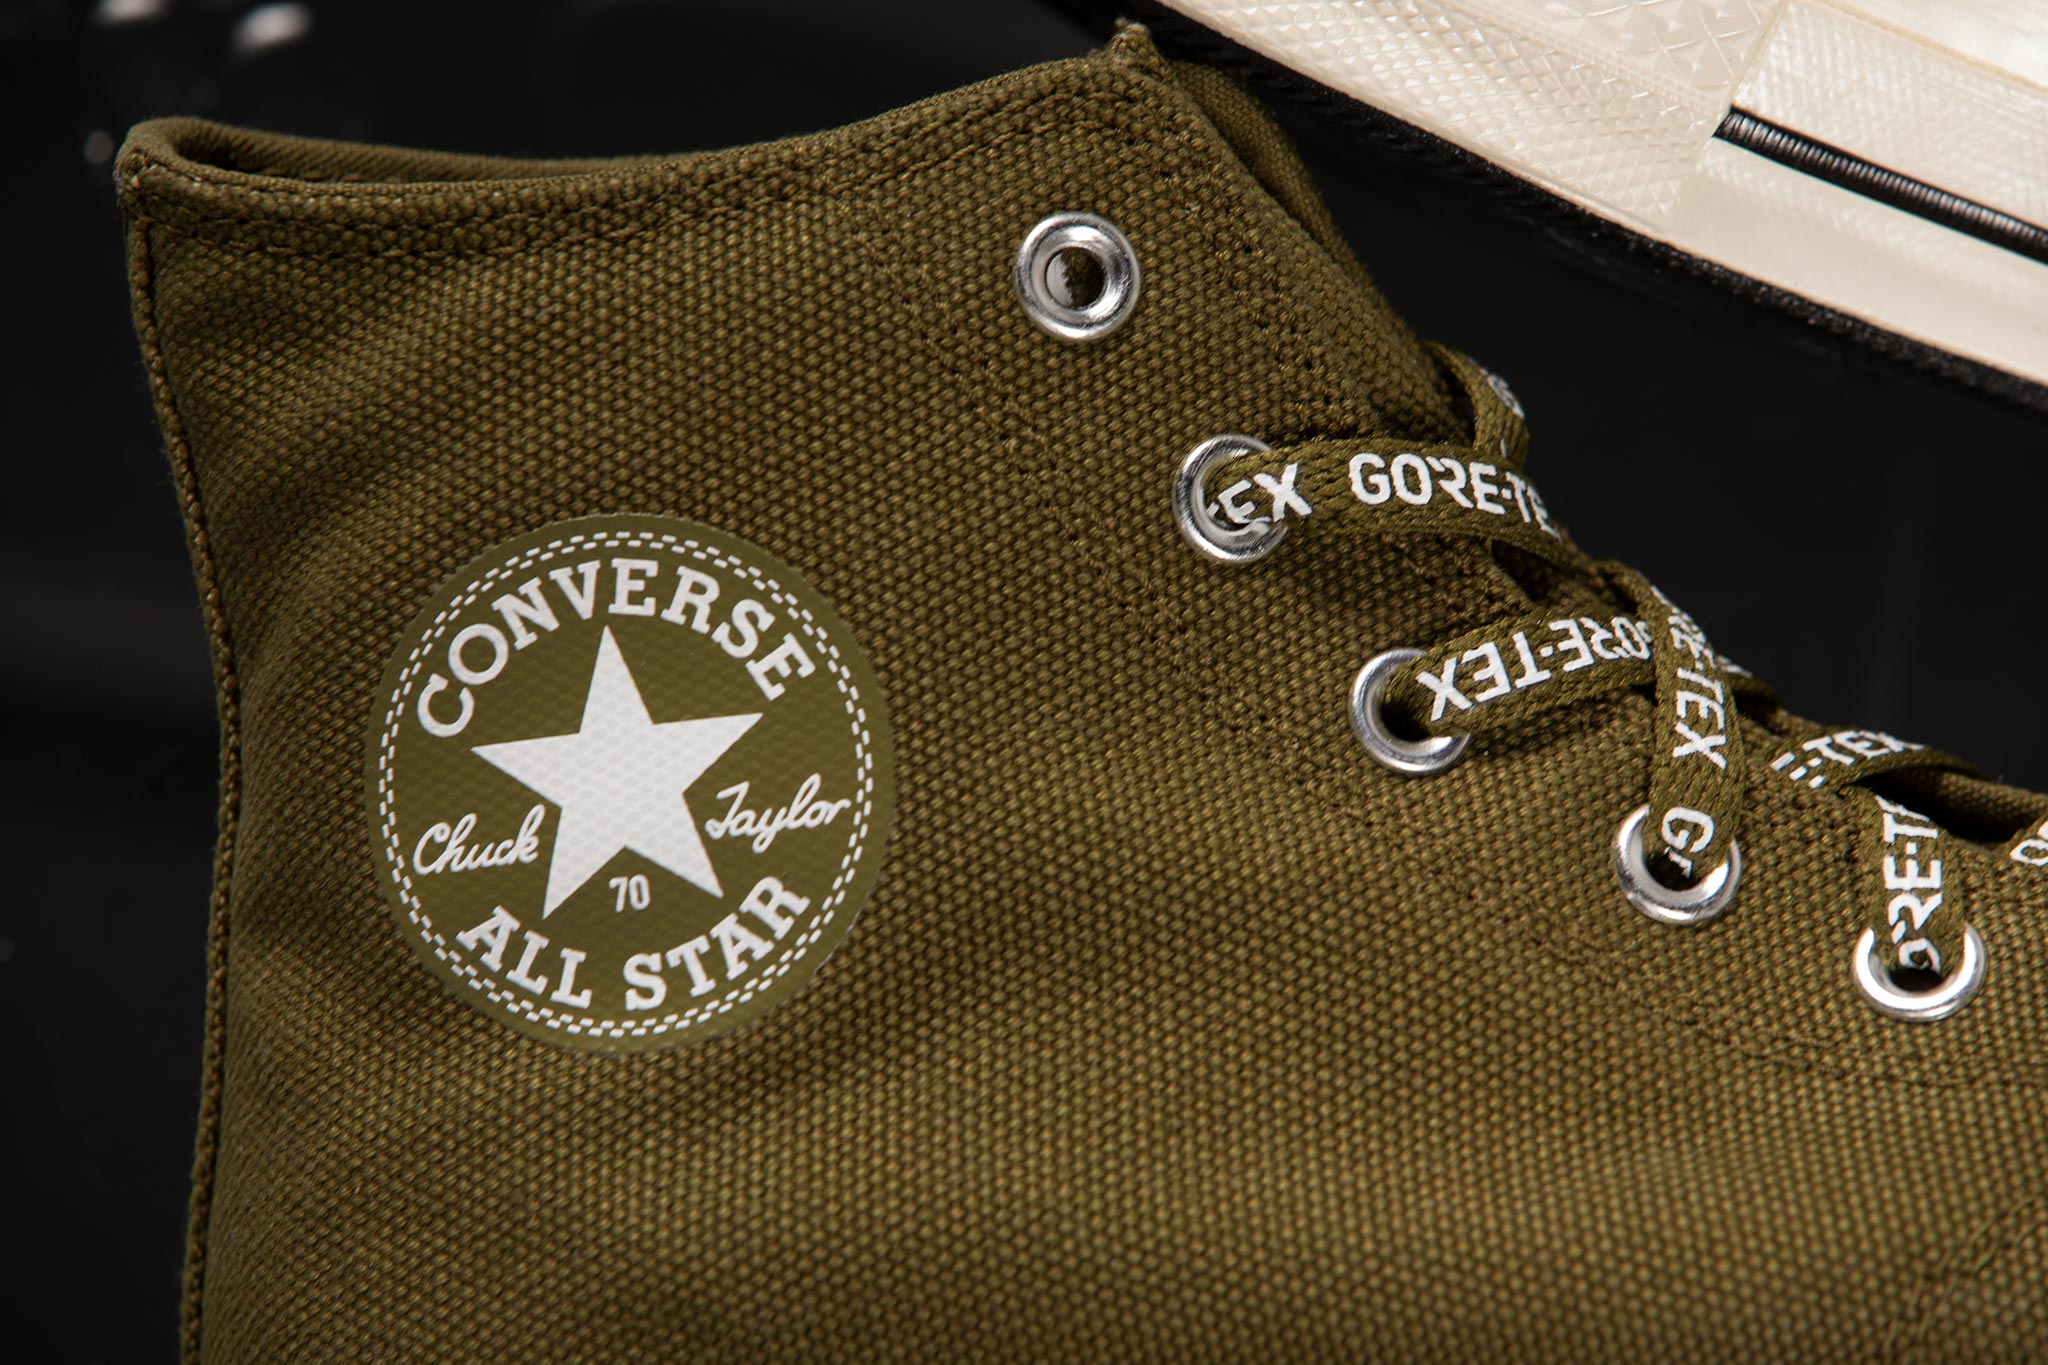 Converse Goretex Chuck 70 - 2